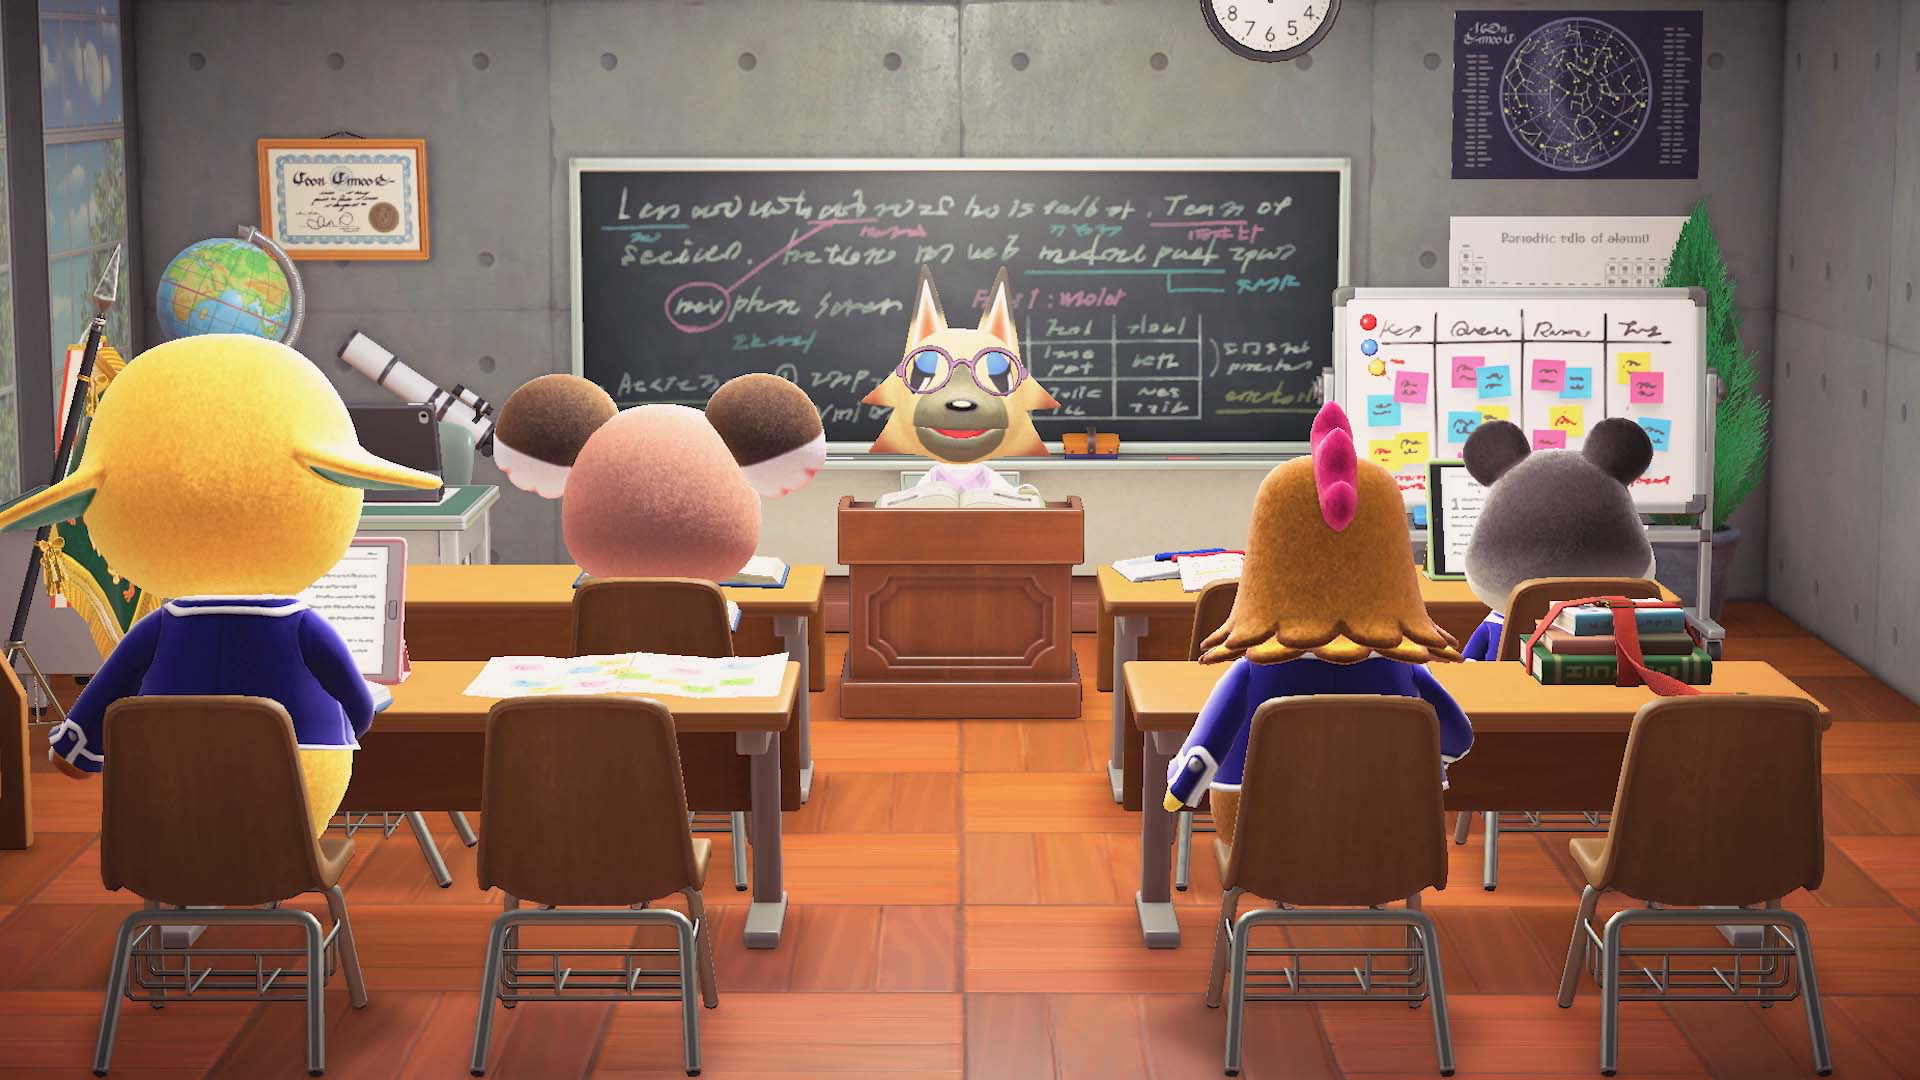 Animal Crossing: New Horizons announces Happy Home Paradise DLC